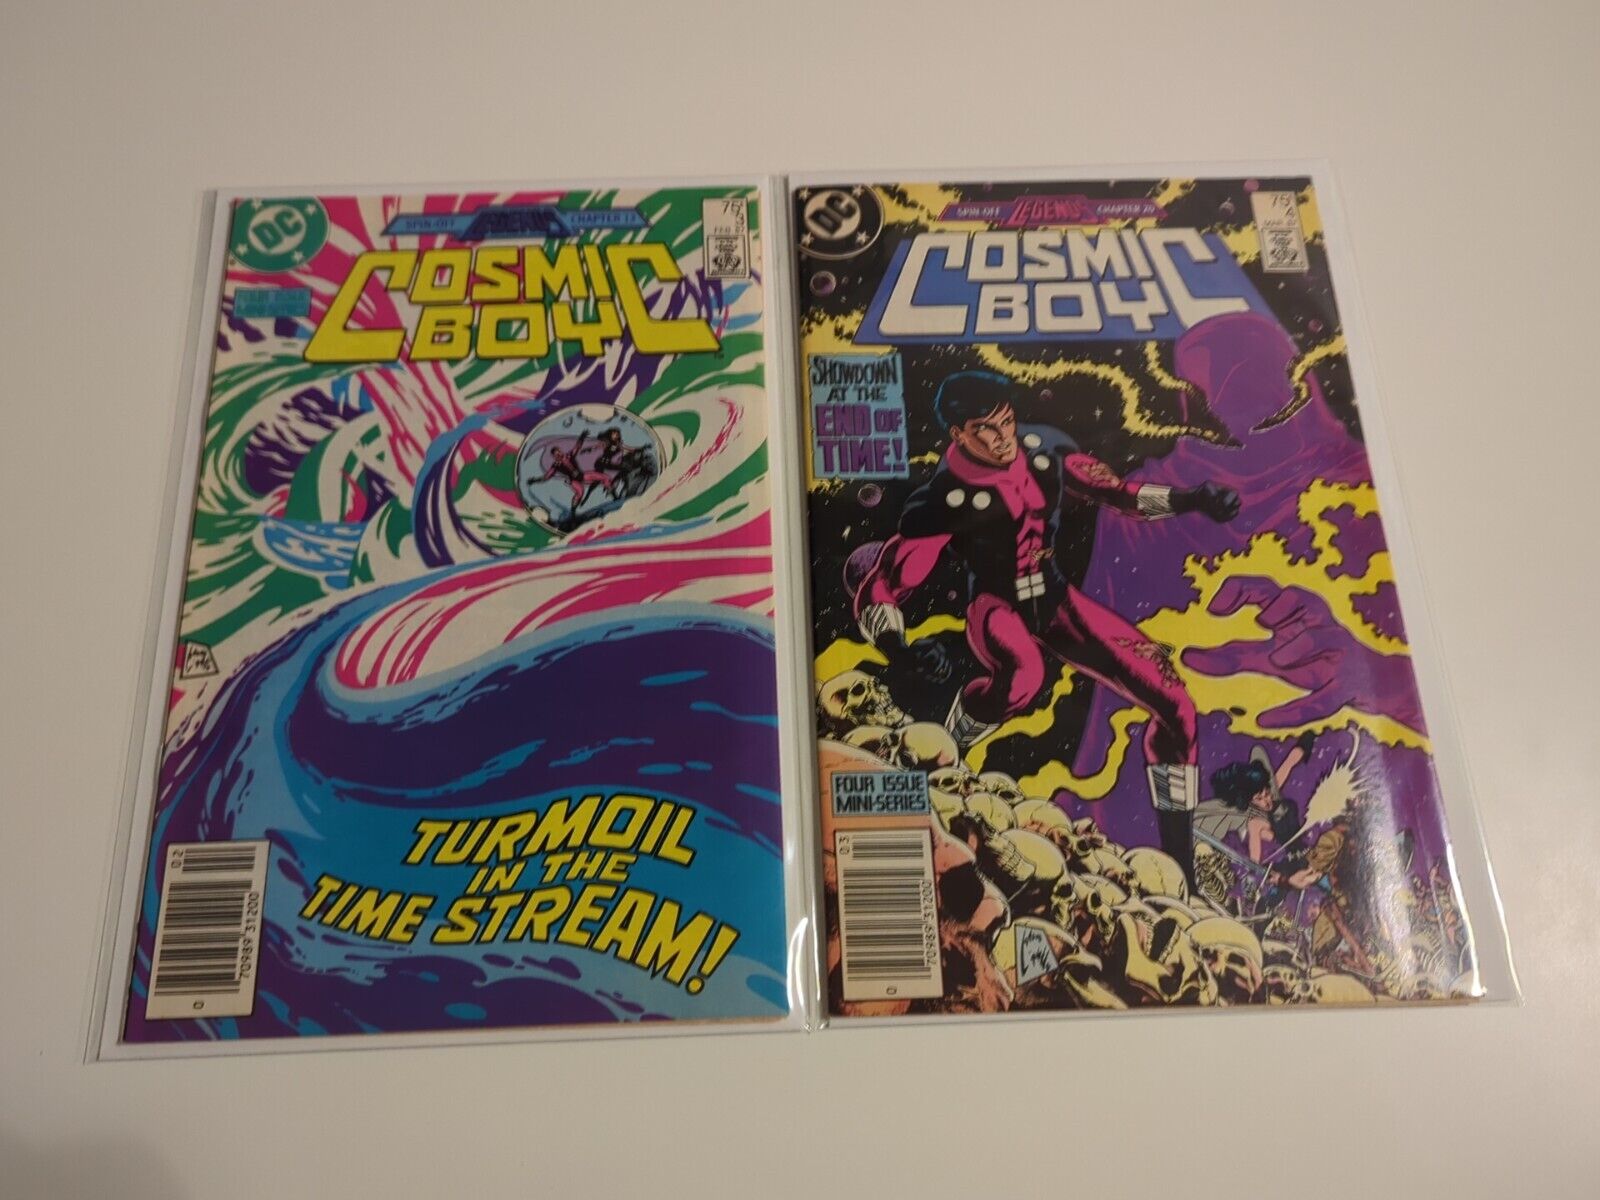 COSMIC BOY #3 #4 DC COMICS DECEMBER 1986 MINI SERIES Nice Comics Lot !